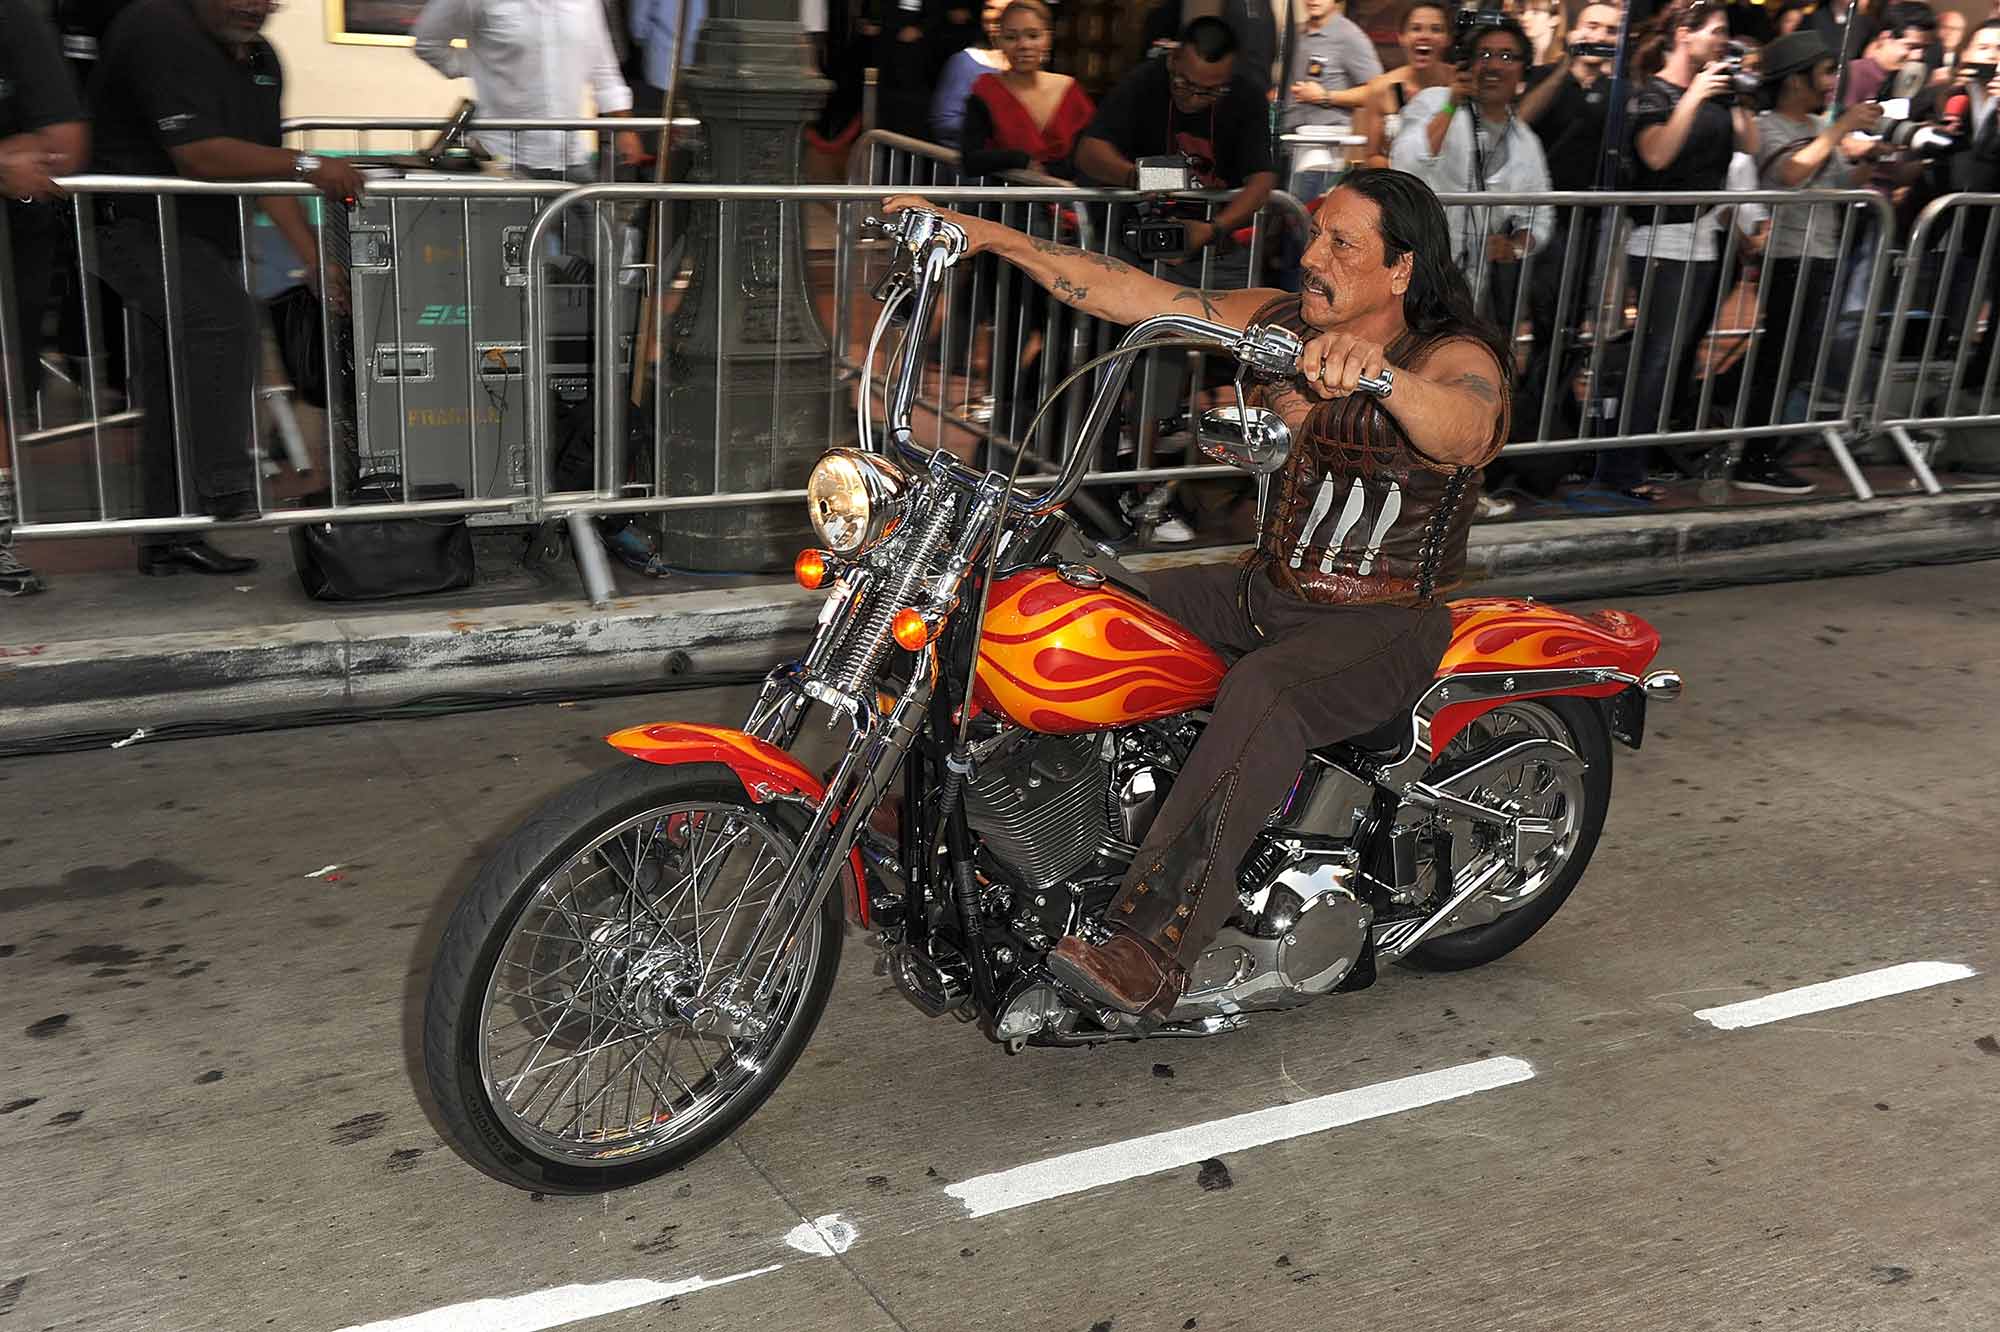 Danny Trejo arrived in style for the Machete premiere. He’s on a custom Harley Softail Springer. 